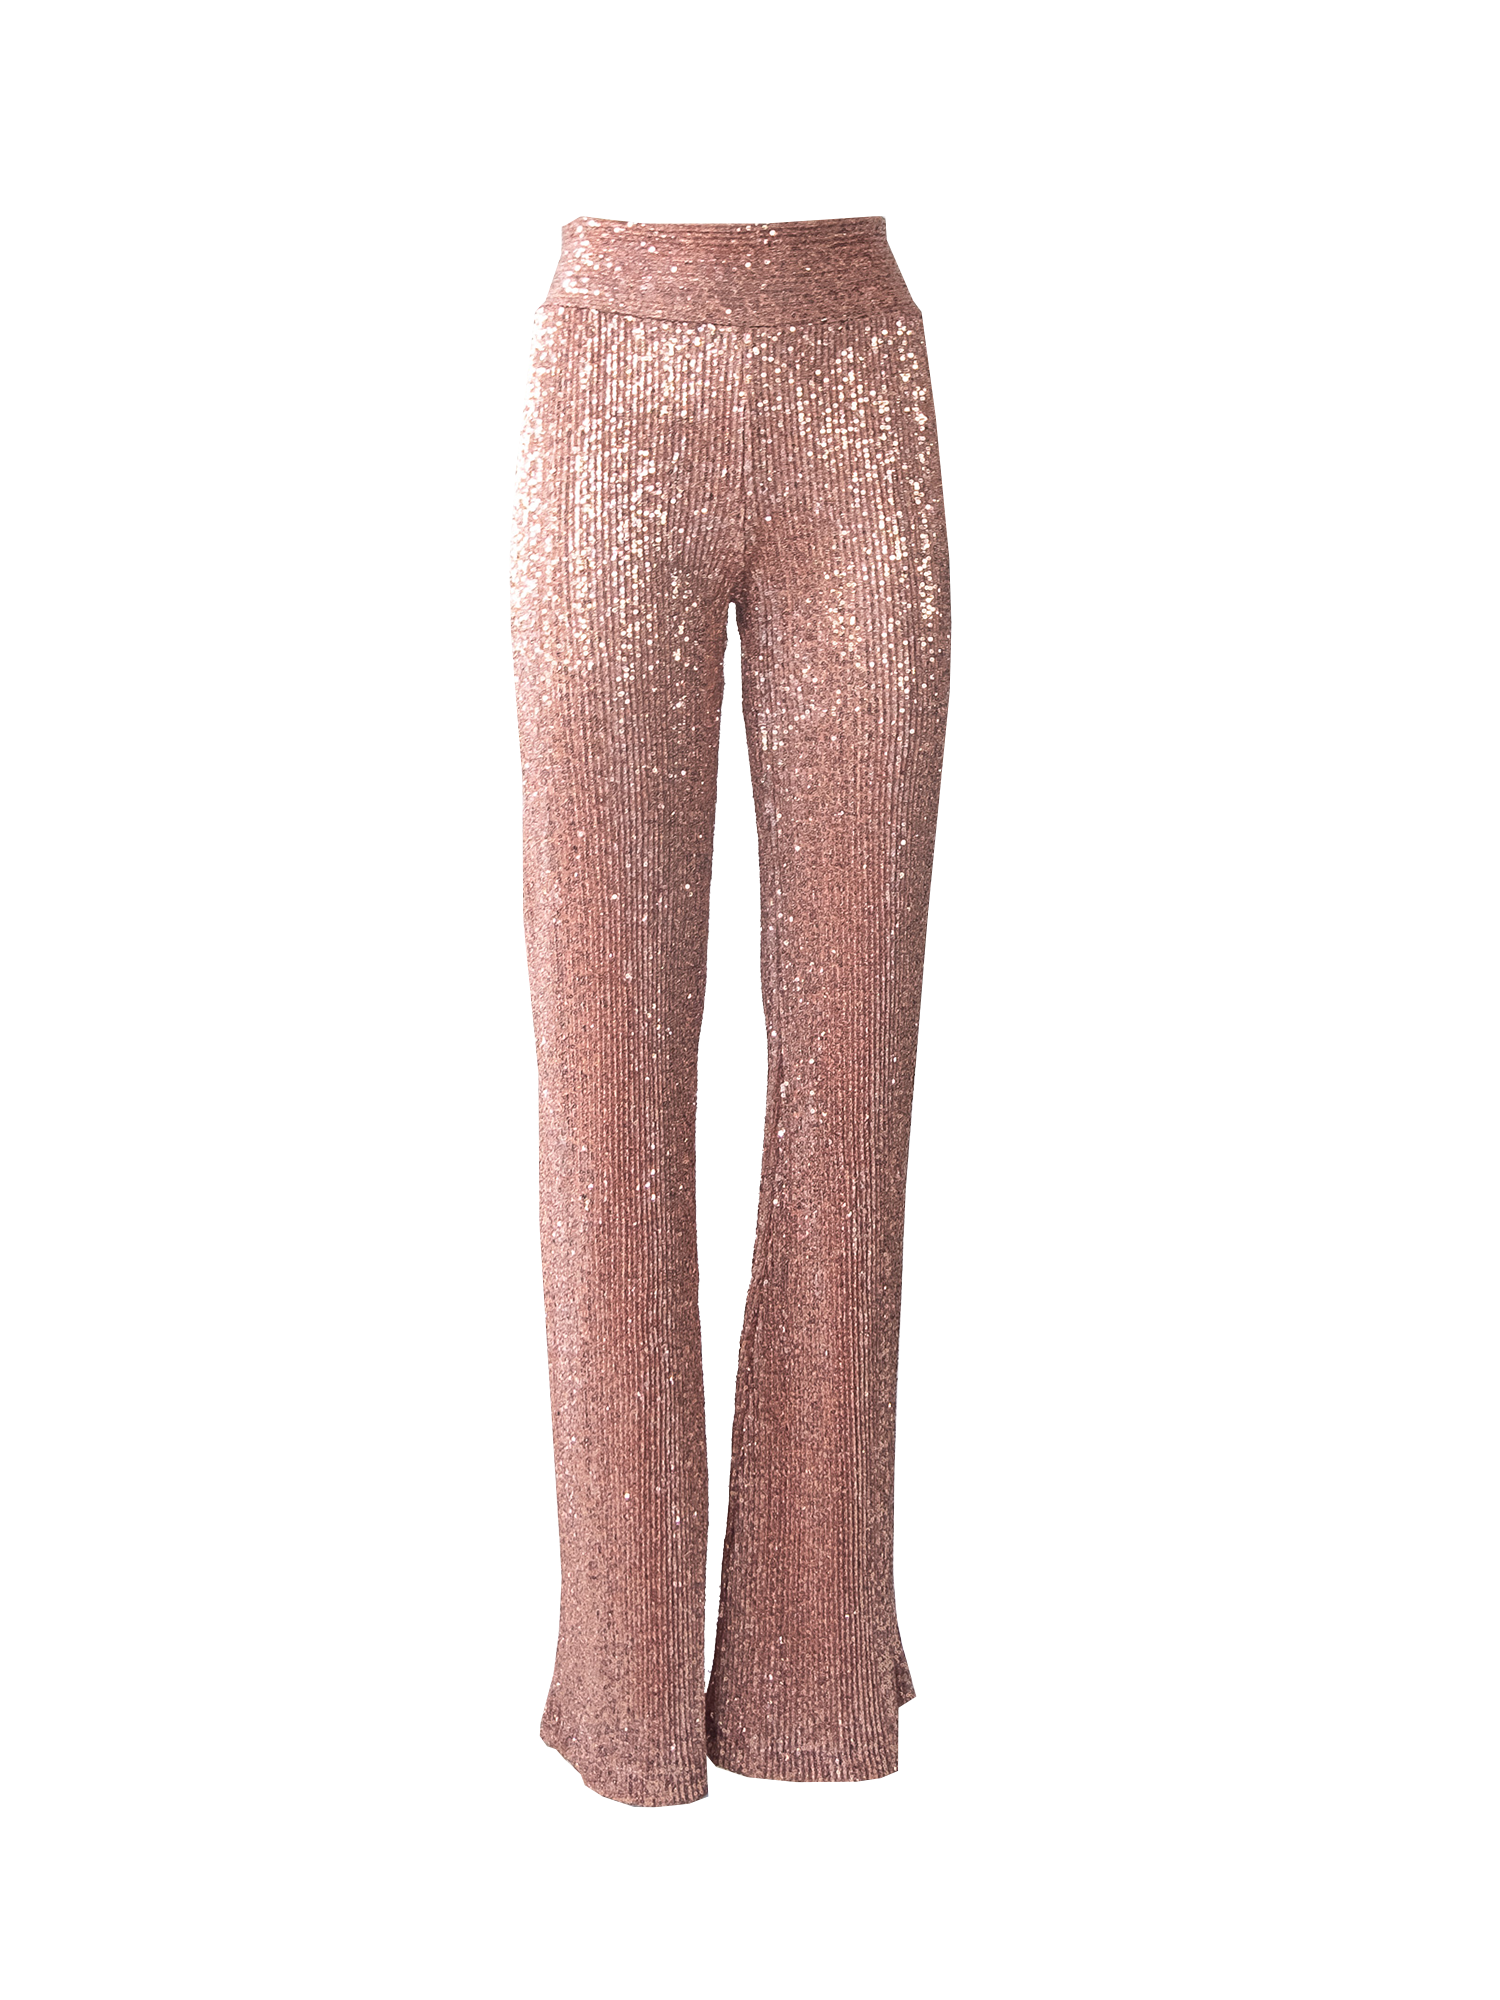 MIMI - pink sequin palazzo pants